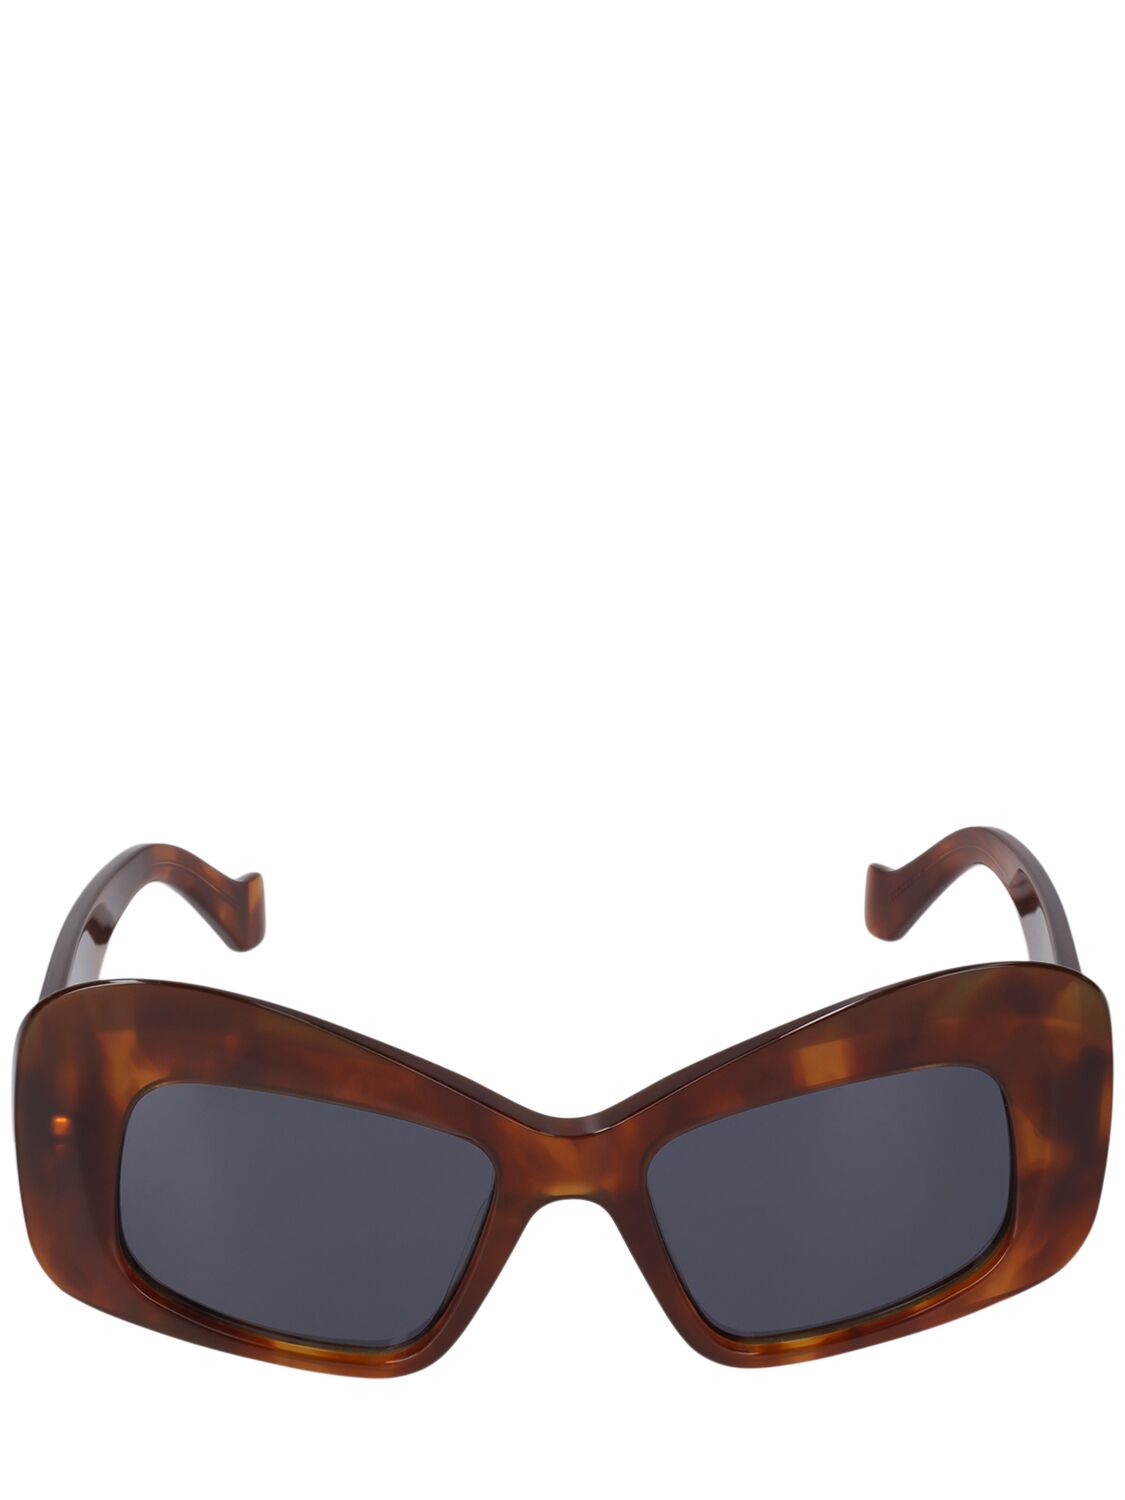 Image of Anagram Round Sunglasses